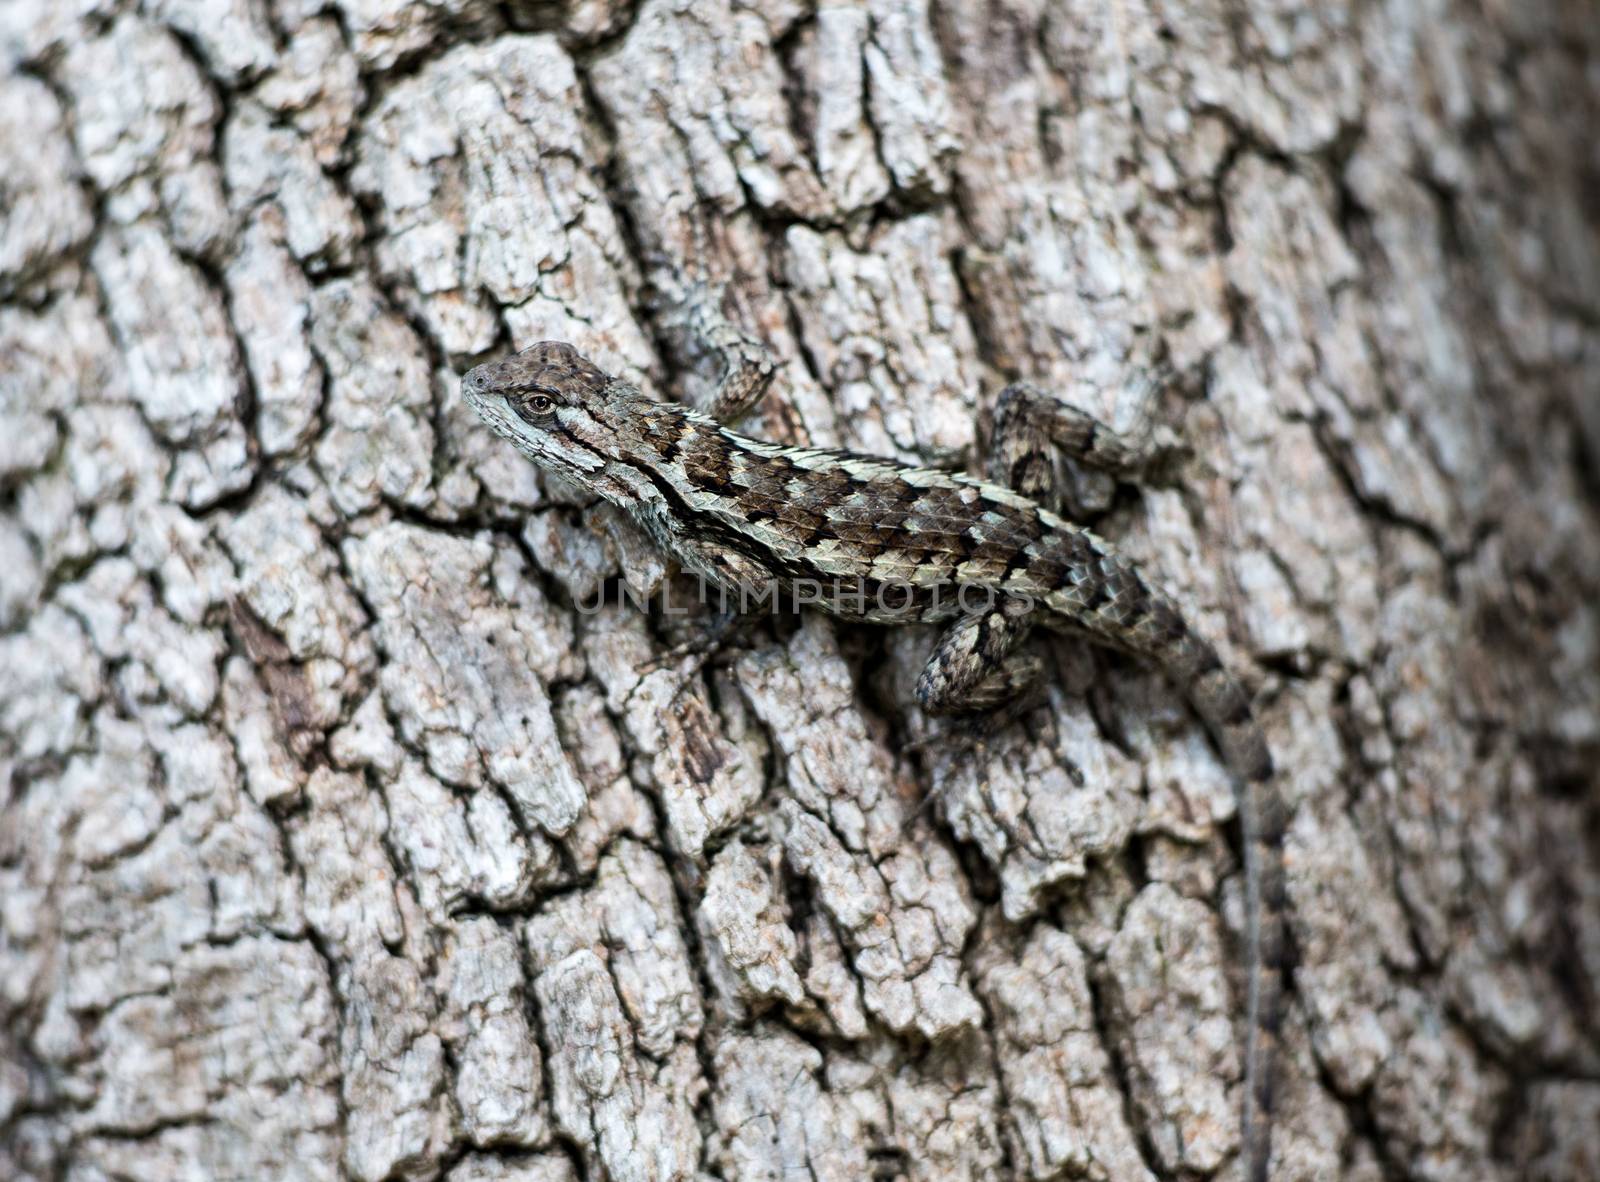 Texas spiny lizard on a tree